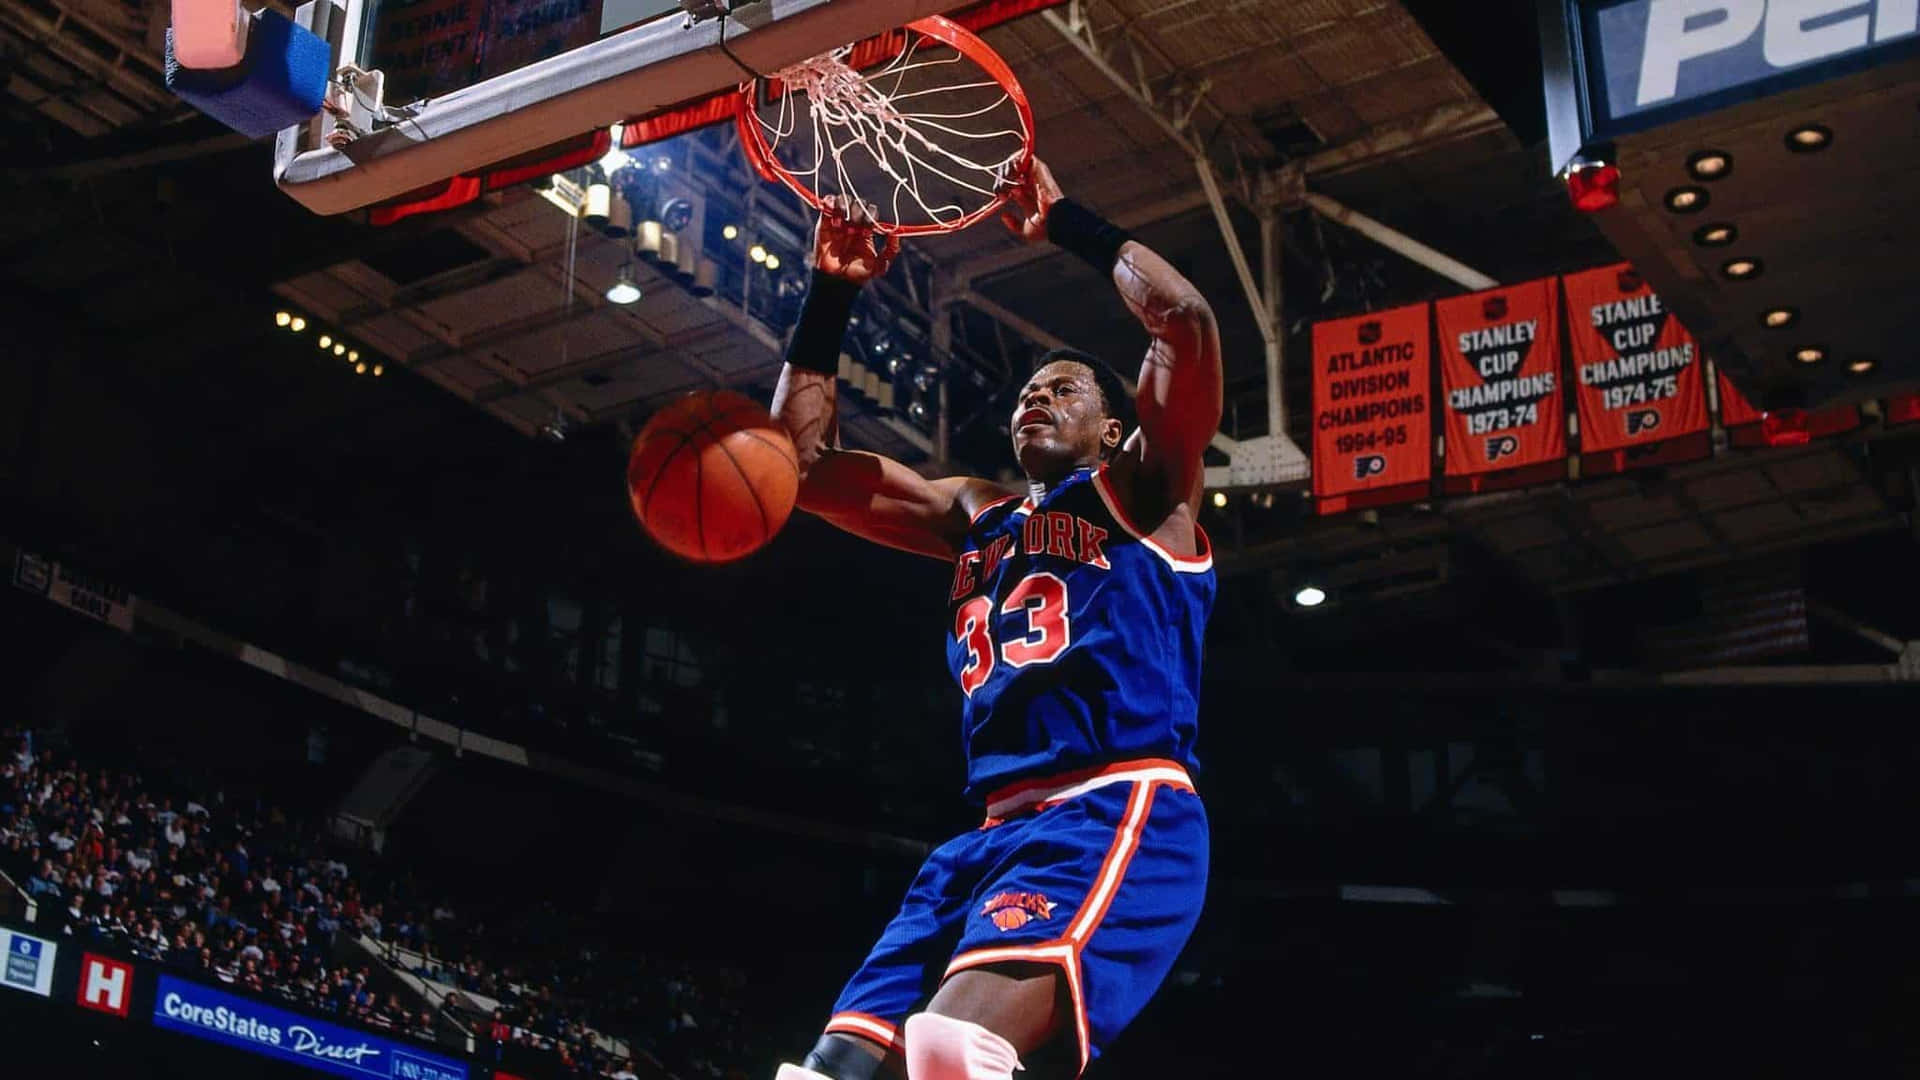 Patrick Ewing Basketball Center Knicks Wallpaper